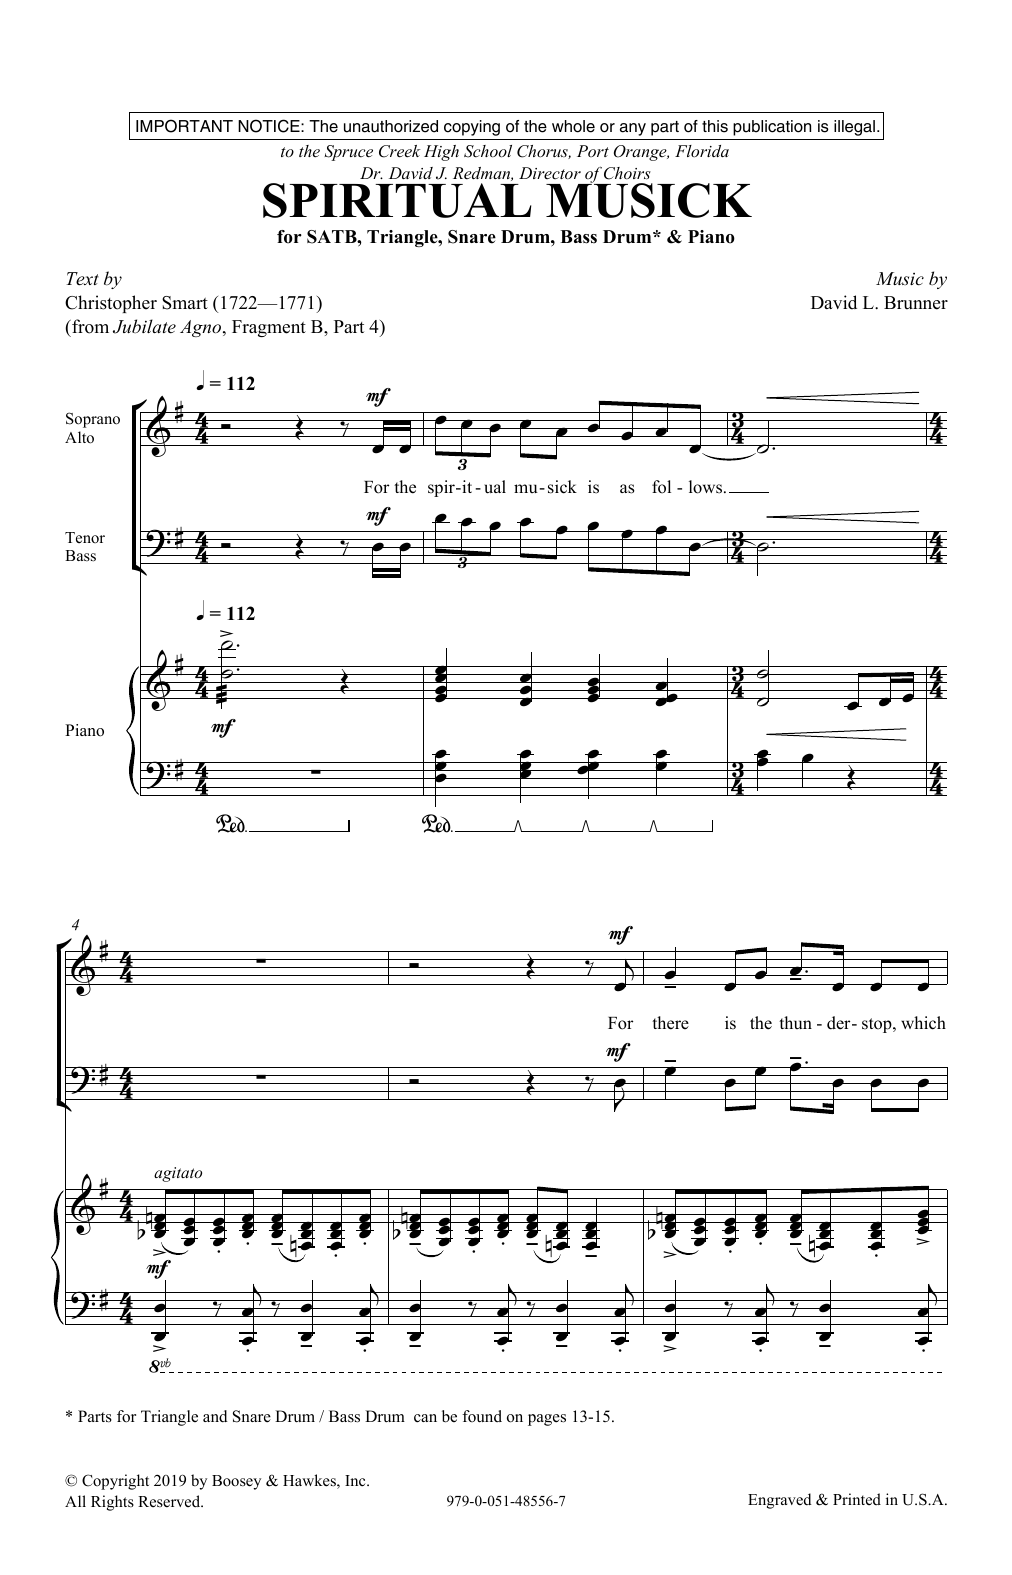 Christopher Smart and David L. Brunner Spiritual Musick Sheet Music Notes & Chords for SATB Choir - Download or Print PDF